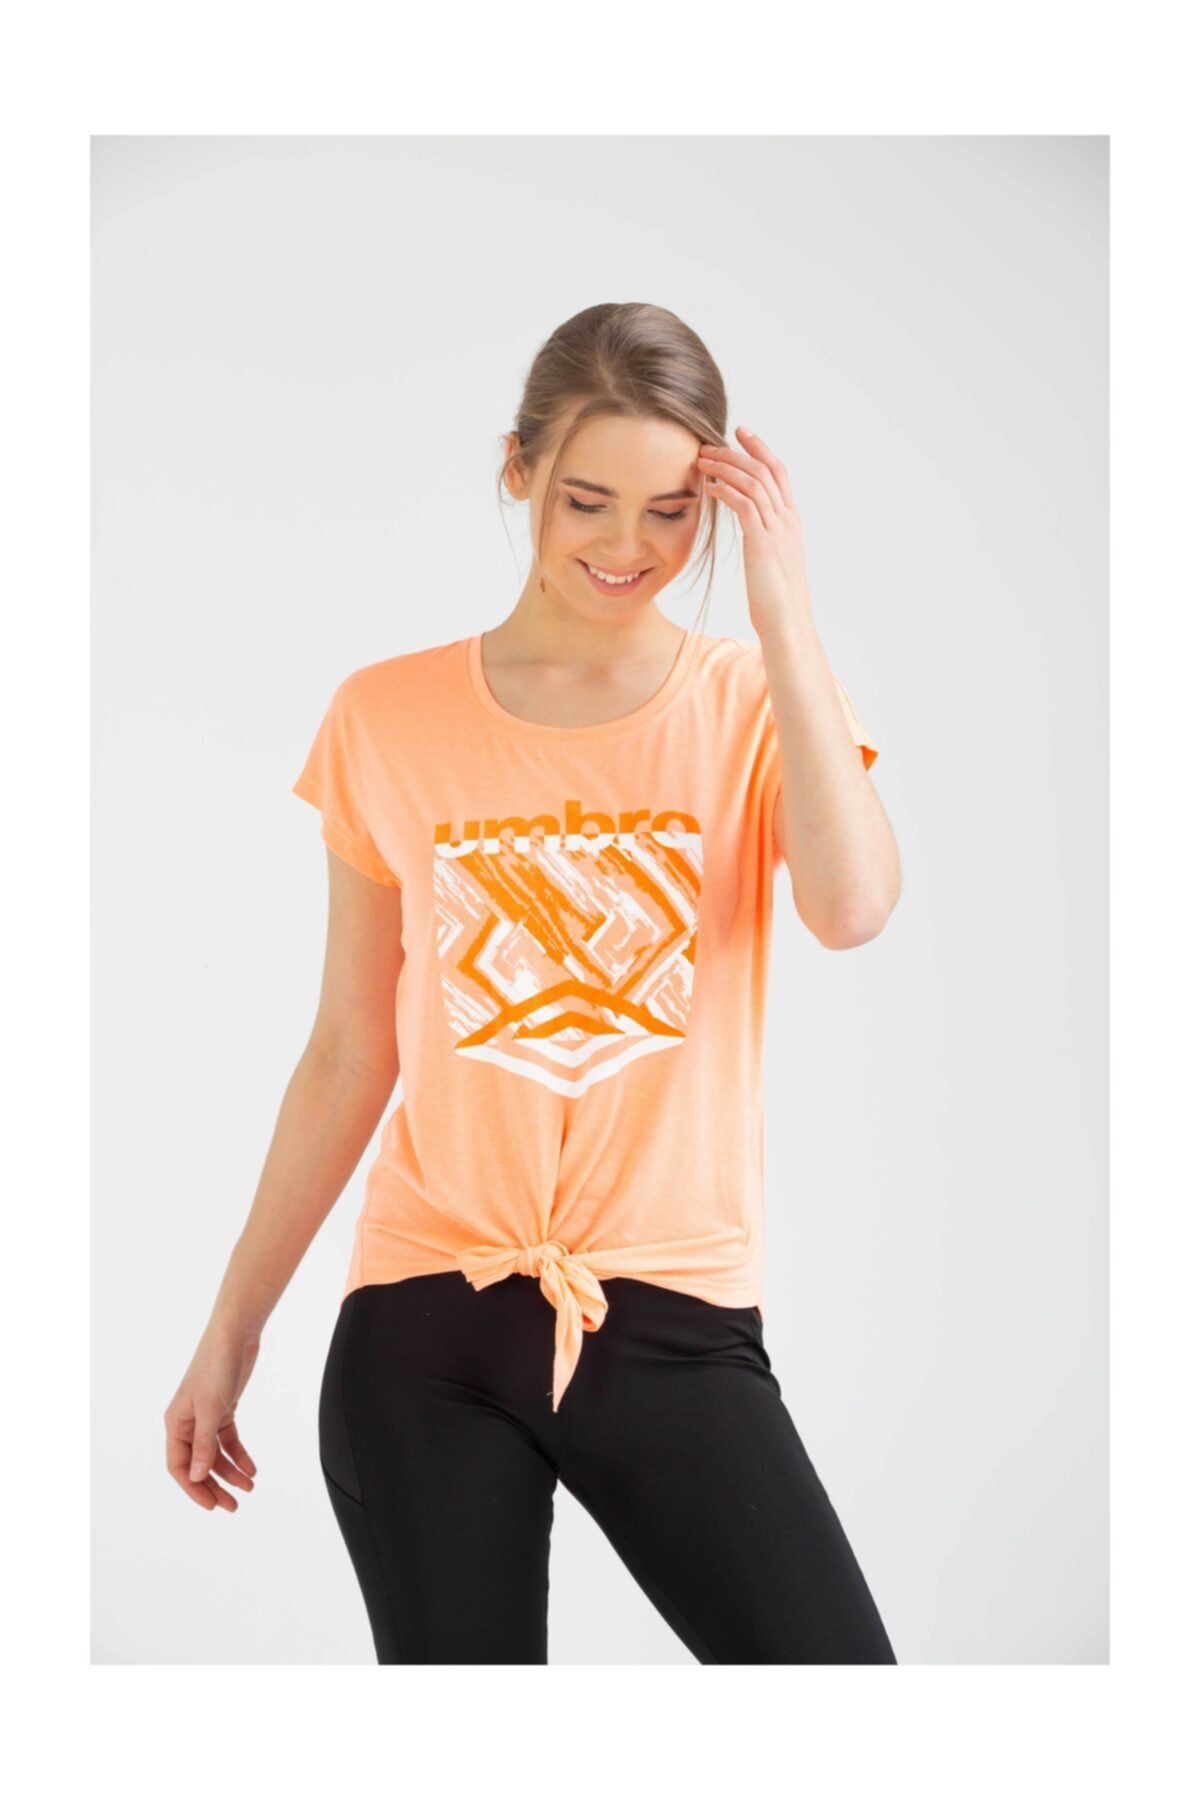 Umbro Kadın T-shirt Vf-0007 Pei Tshirt